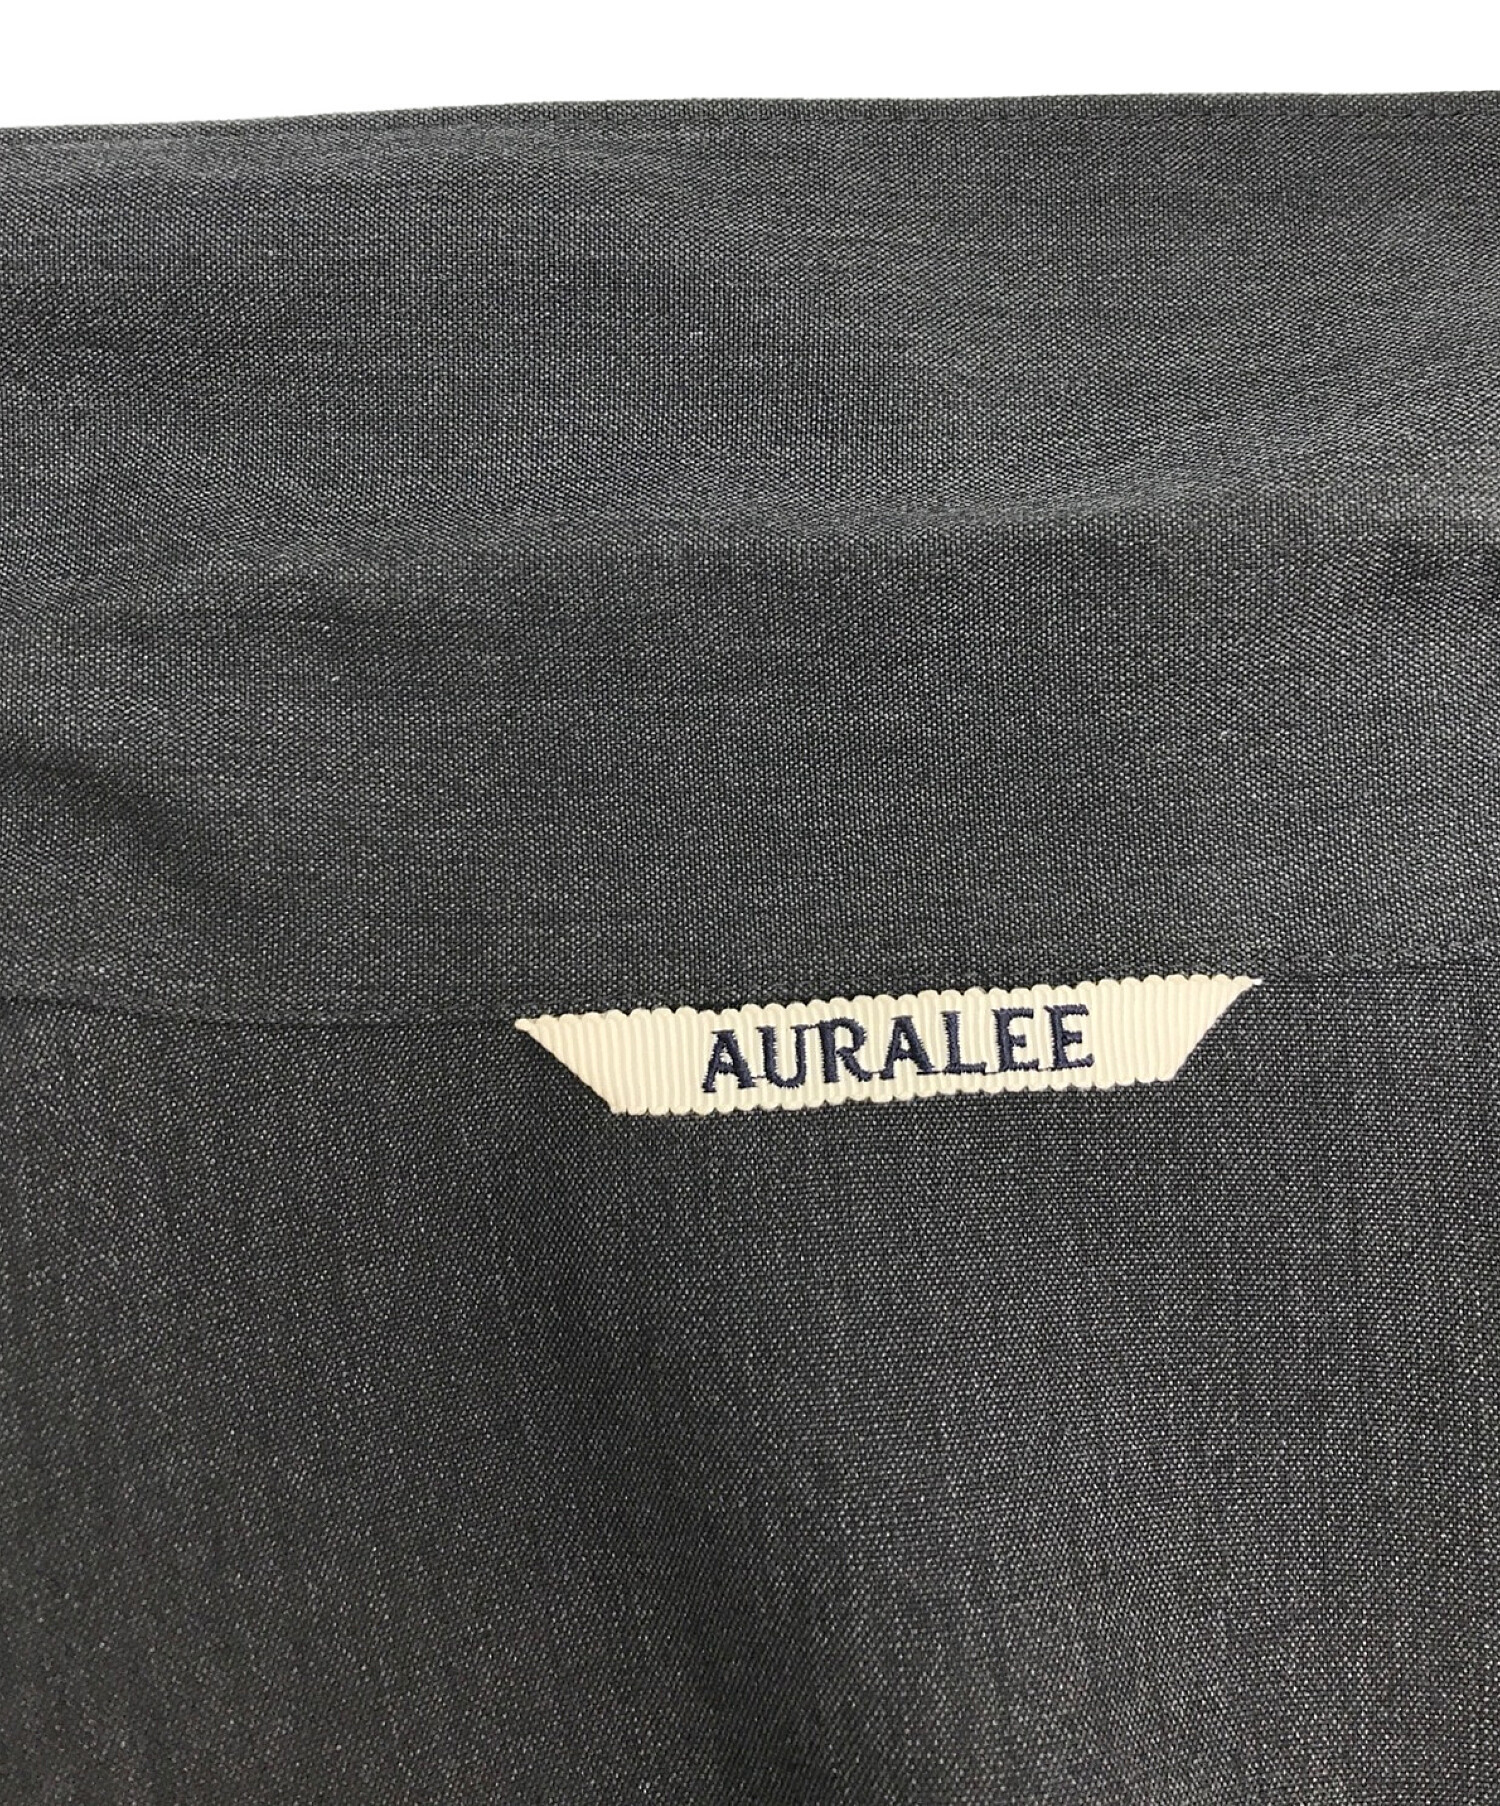 AURALEE (オーラリー) WOOL SILK TROPICAL SHIRTS JACKET / ウールシクルトロピカルシャツジャケット /  無地ジャケット / ボタンレス グレー サイズ:４